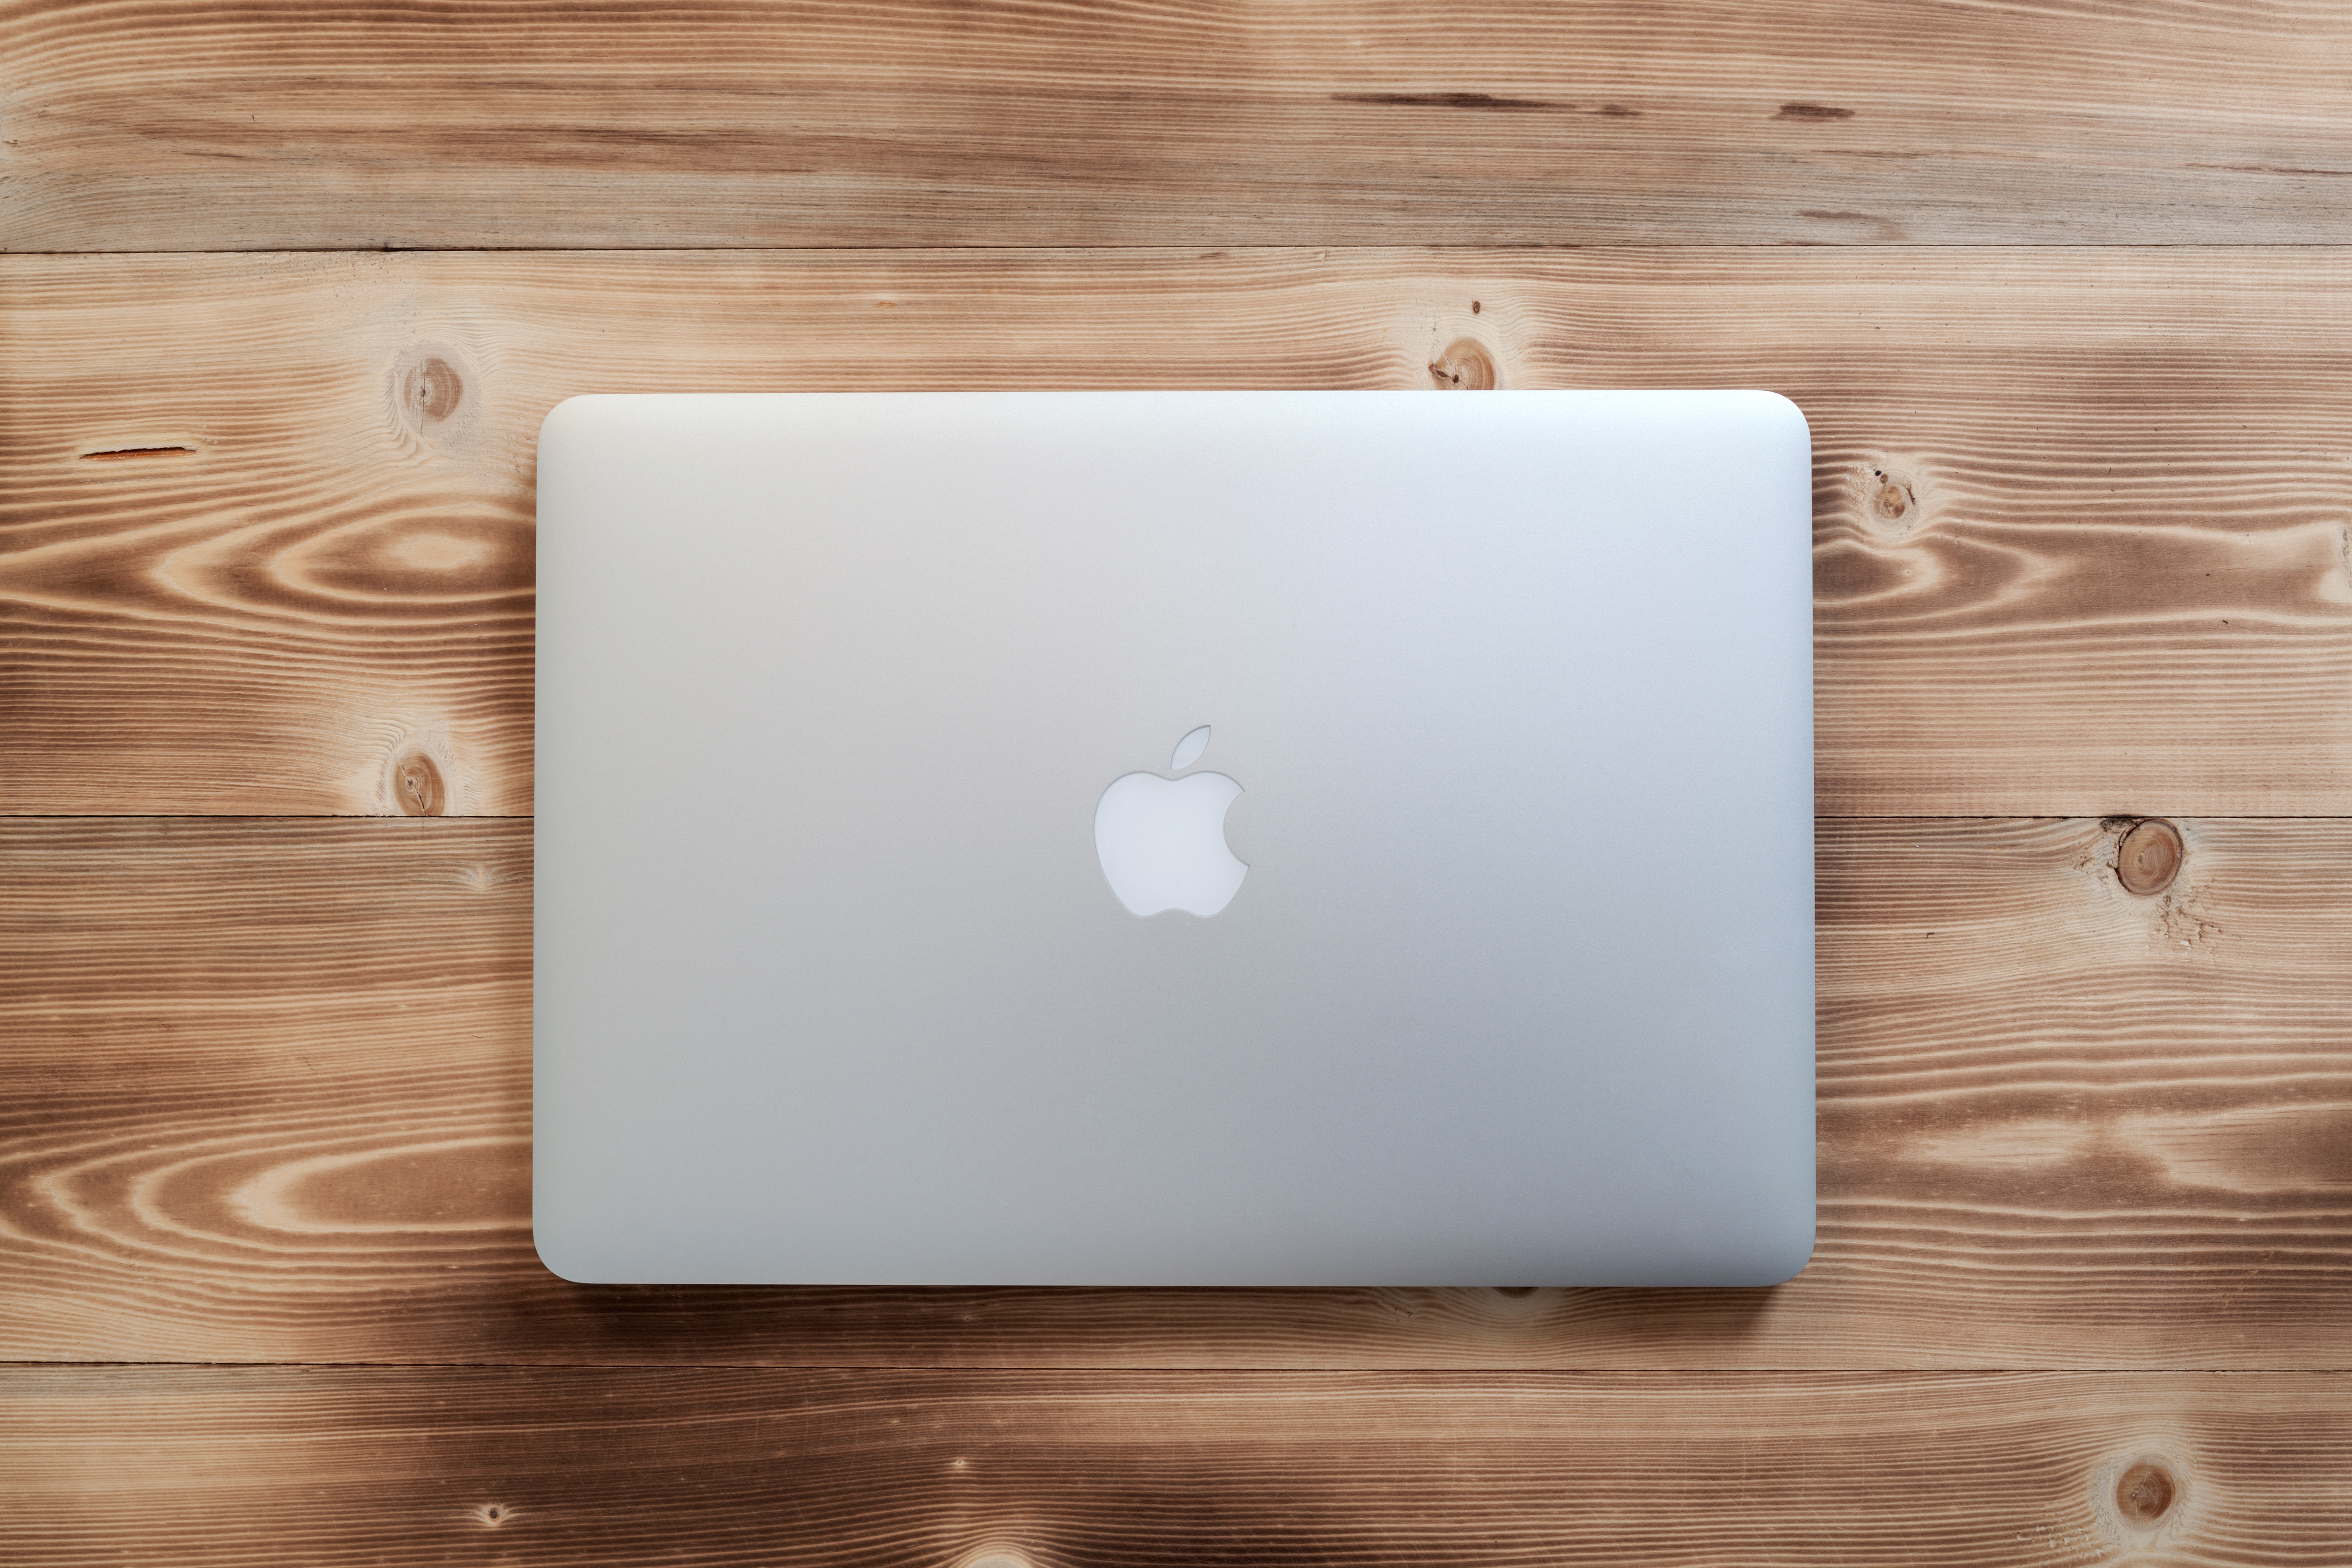  Laptop Macbook Pro termasuk di antaranya Applepaling berharga